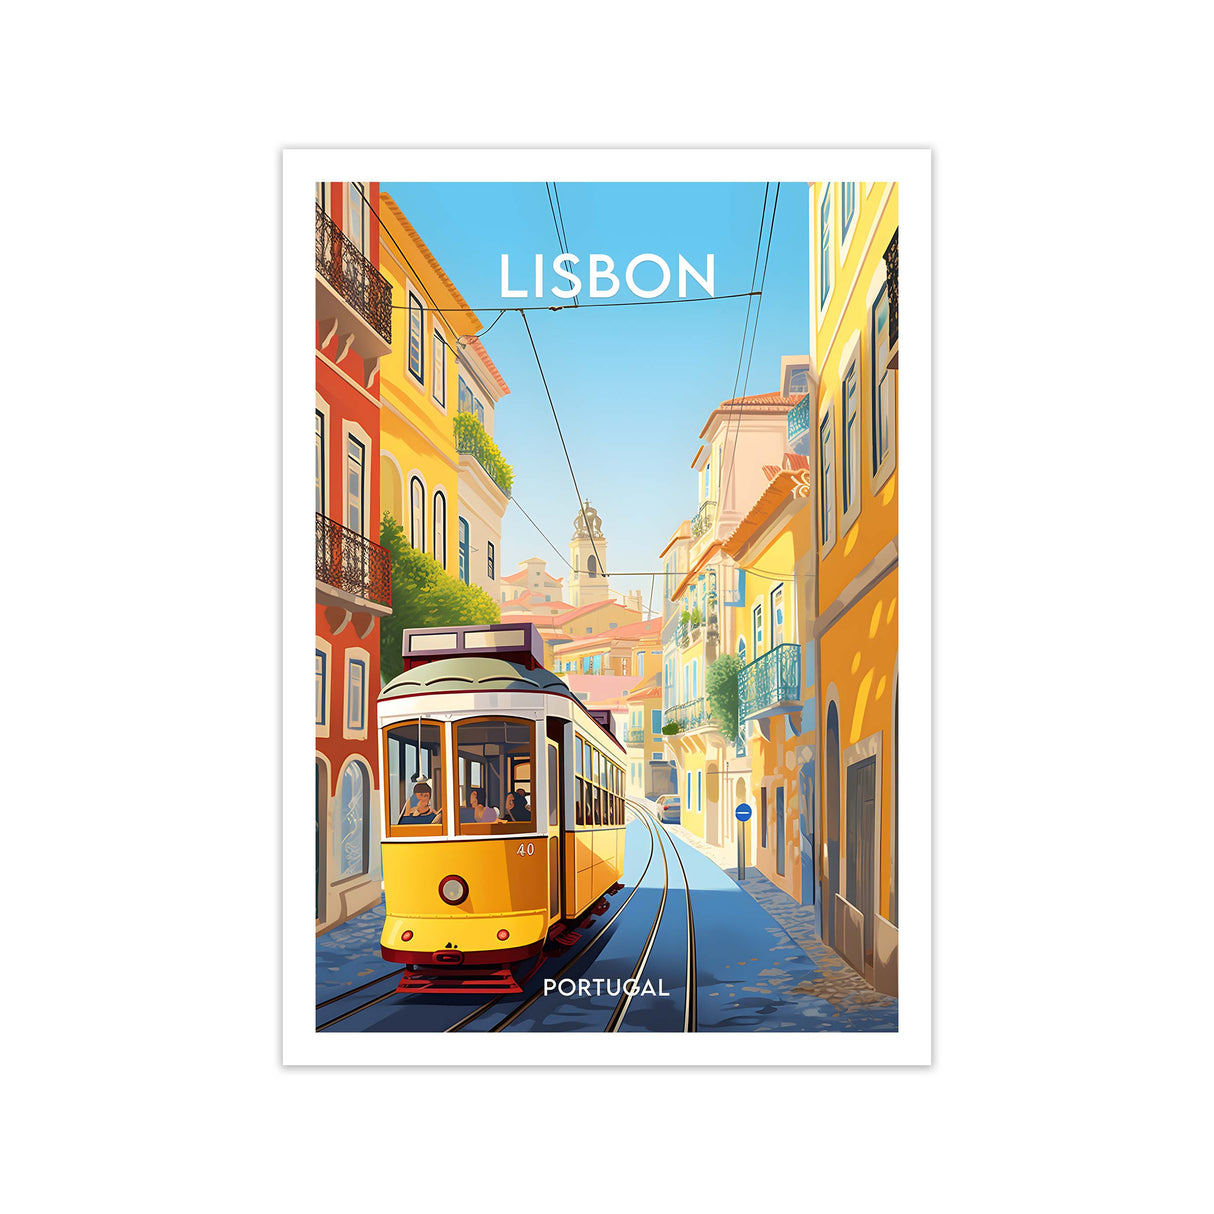 Lisbon, Portugal Poster